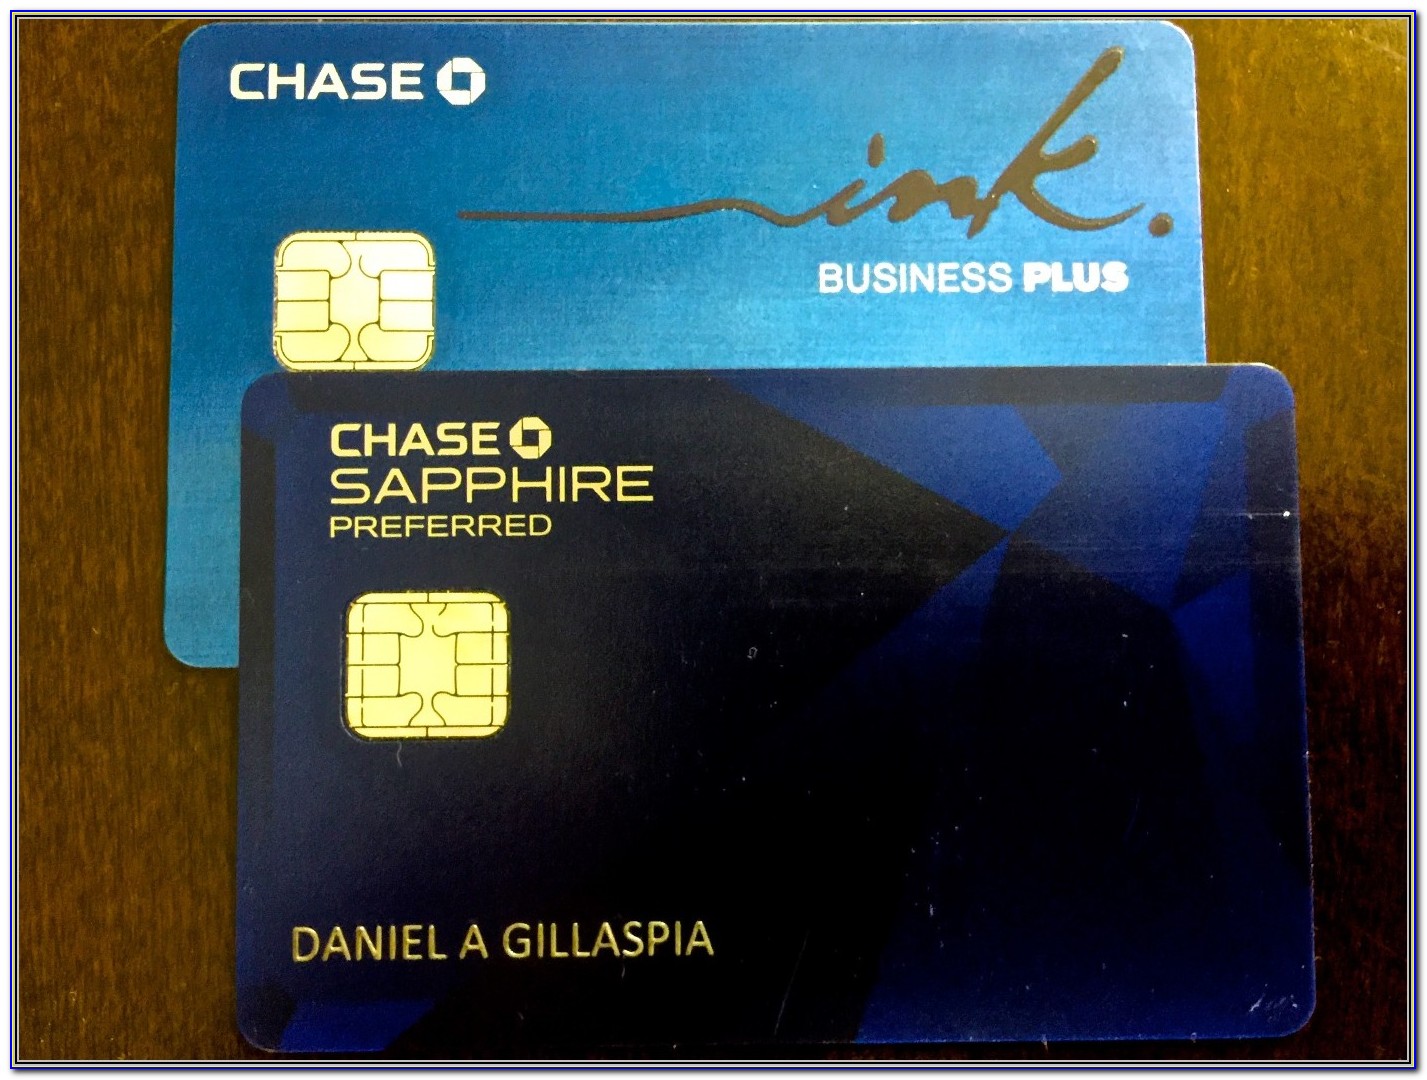 Chase Business Debit Card Limit